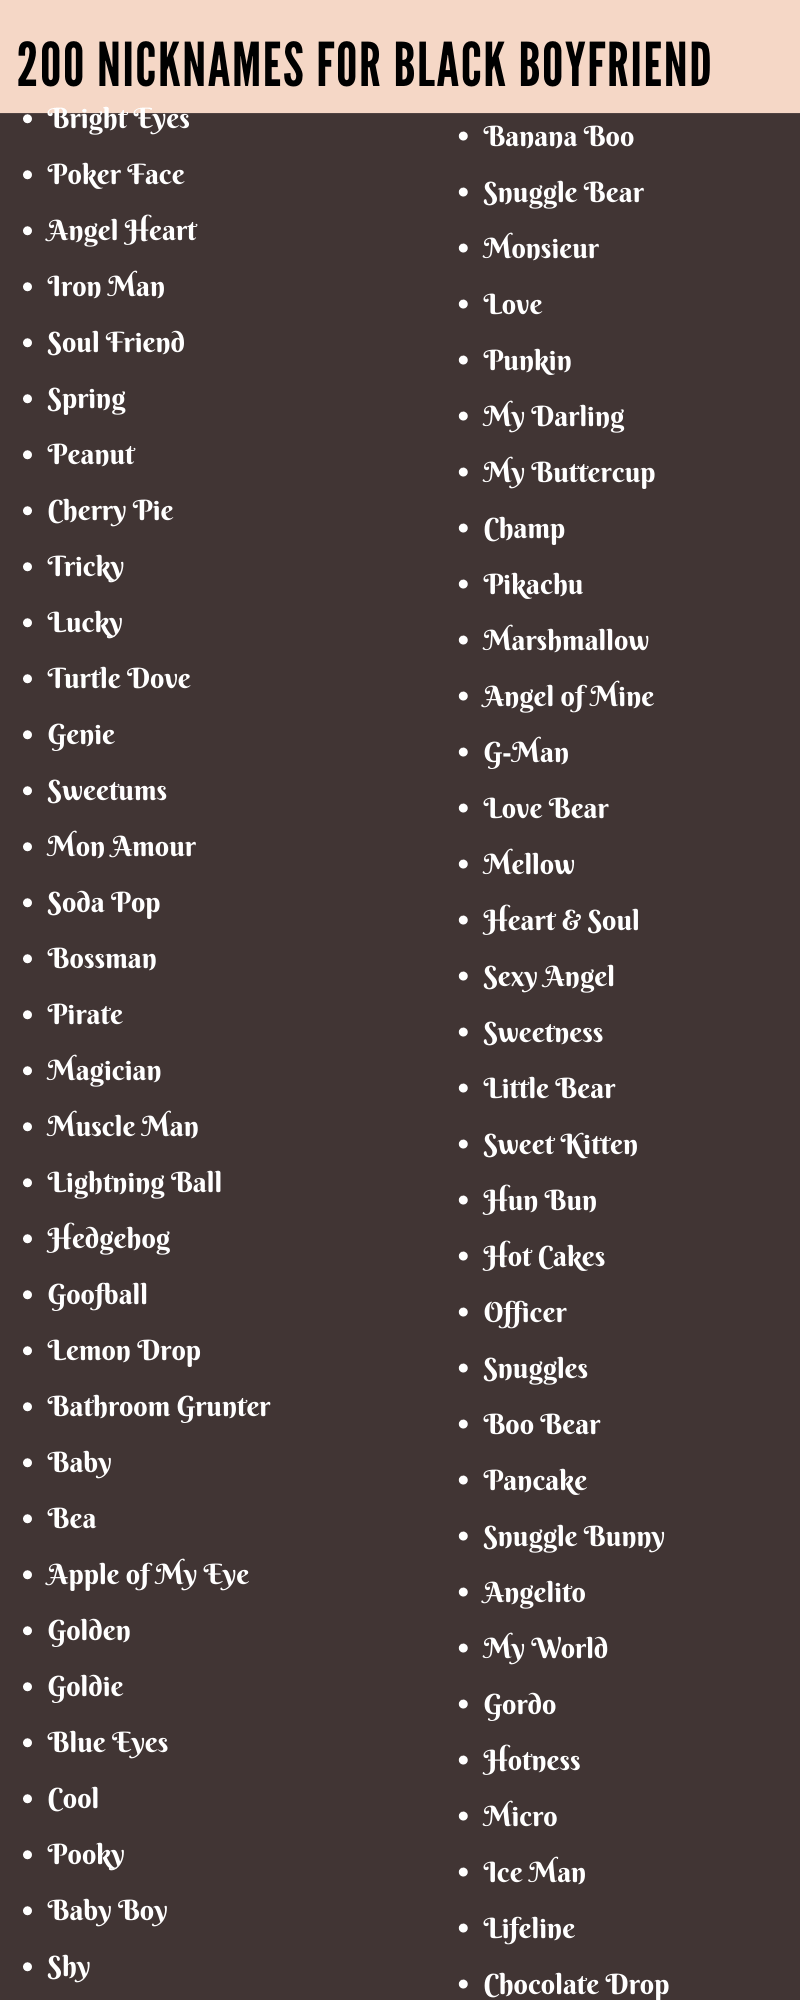 nicknames for black boyfriend